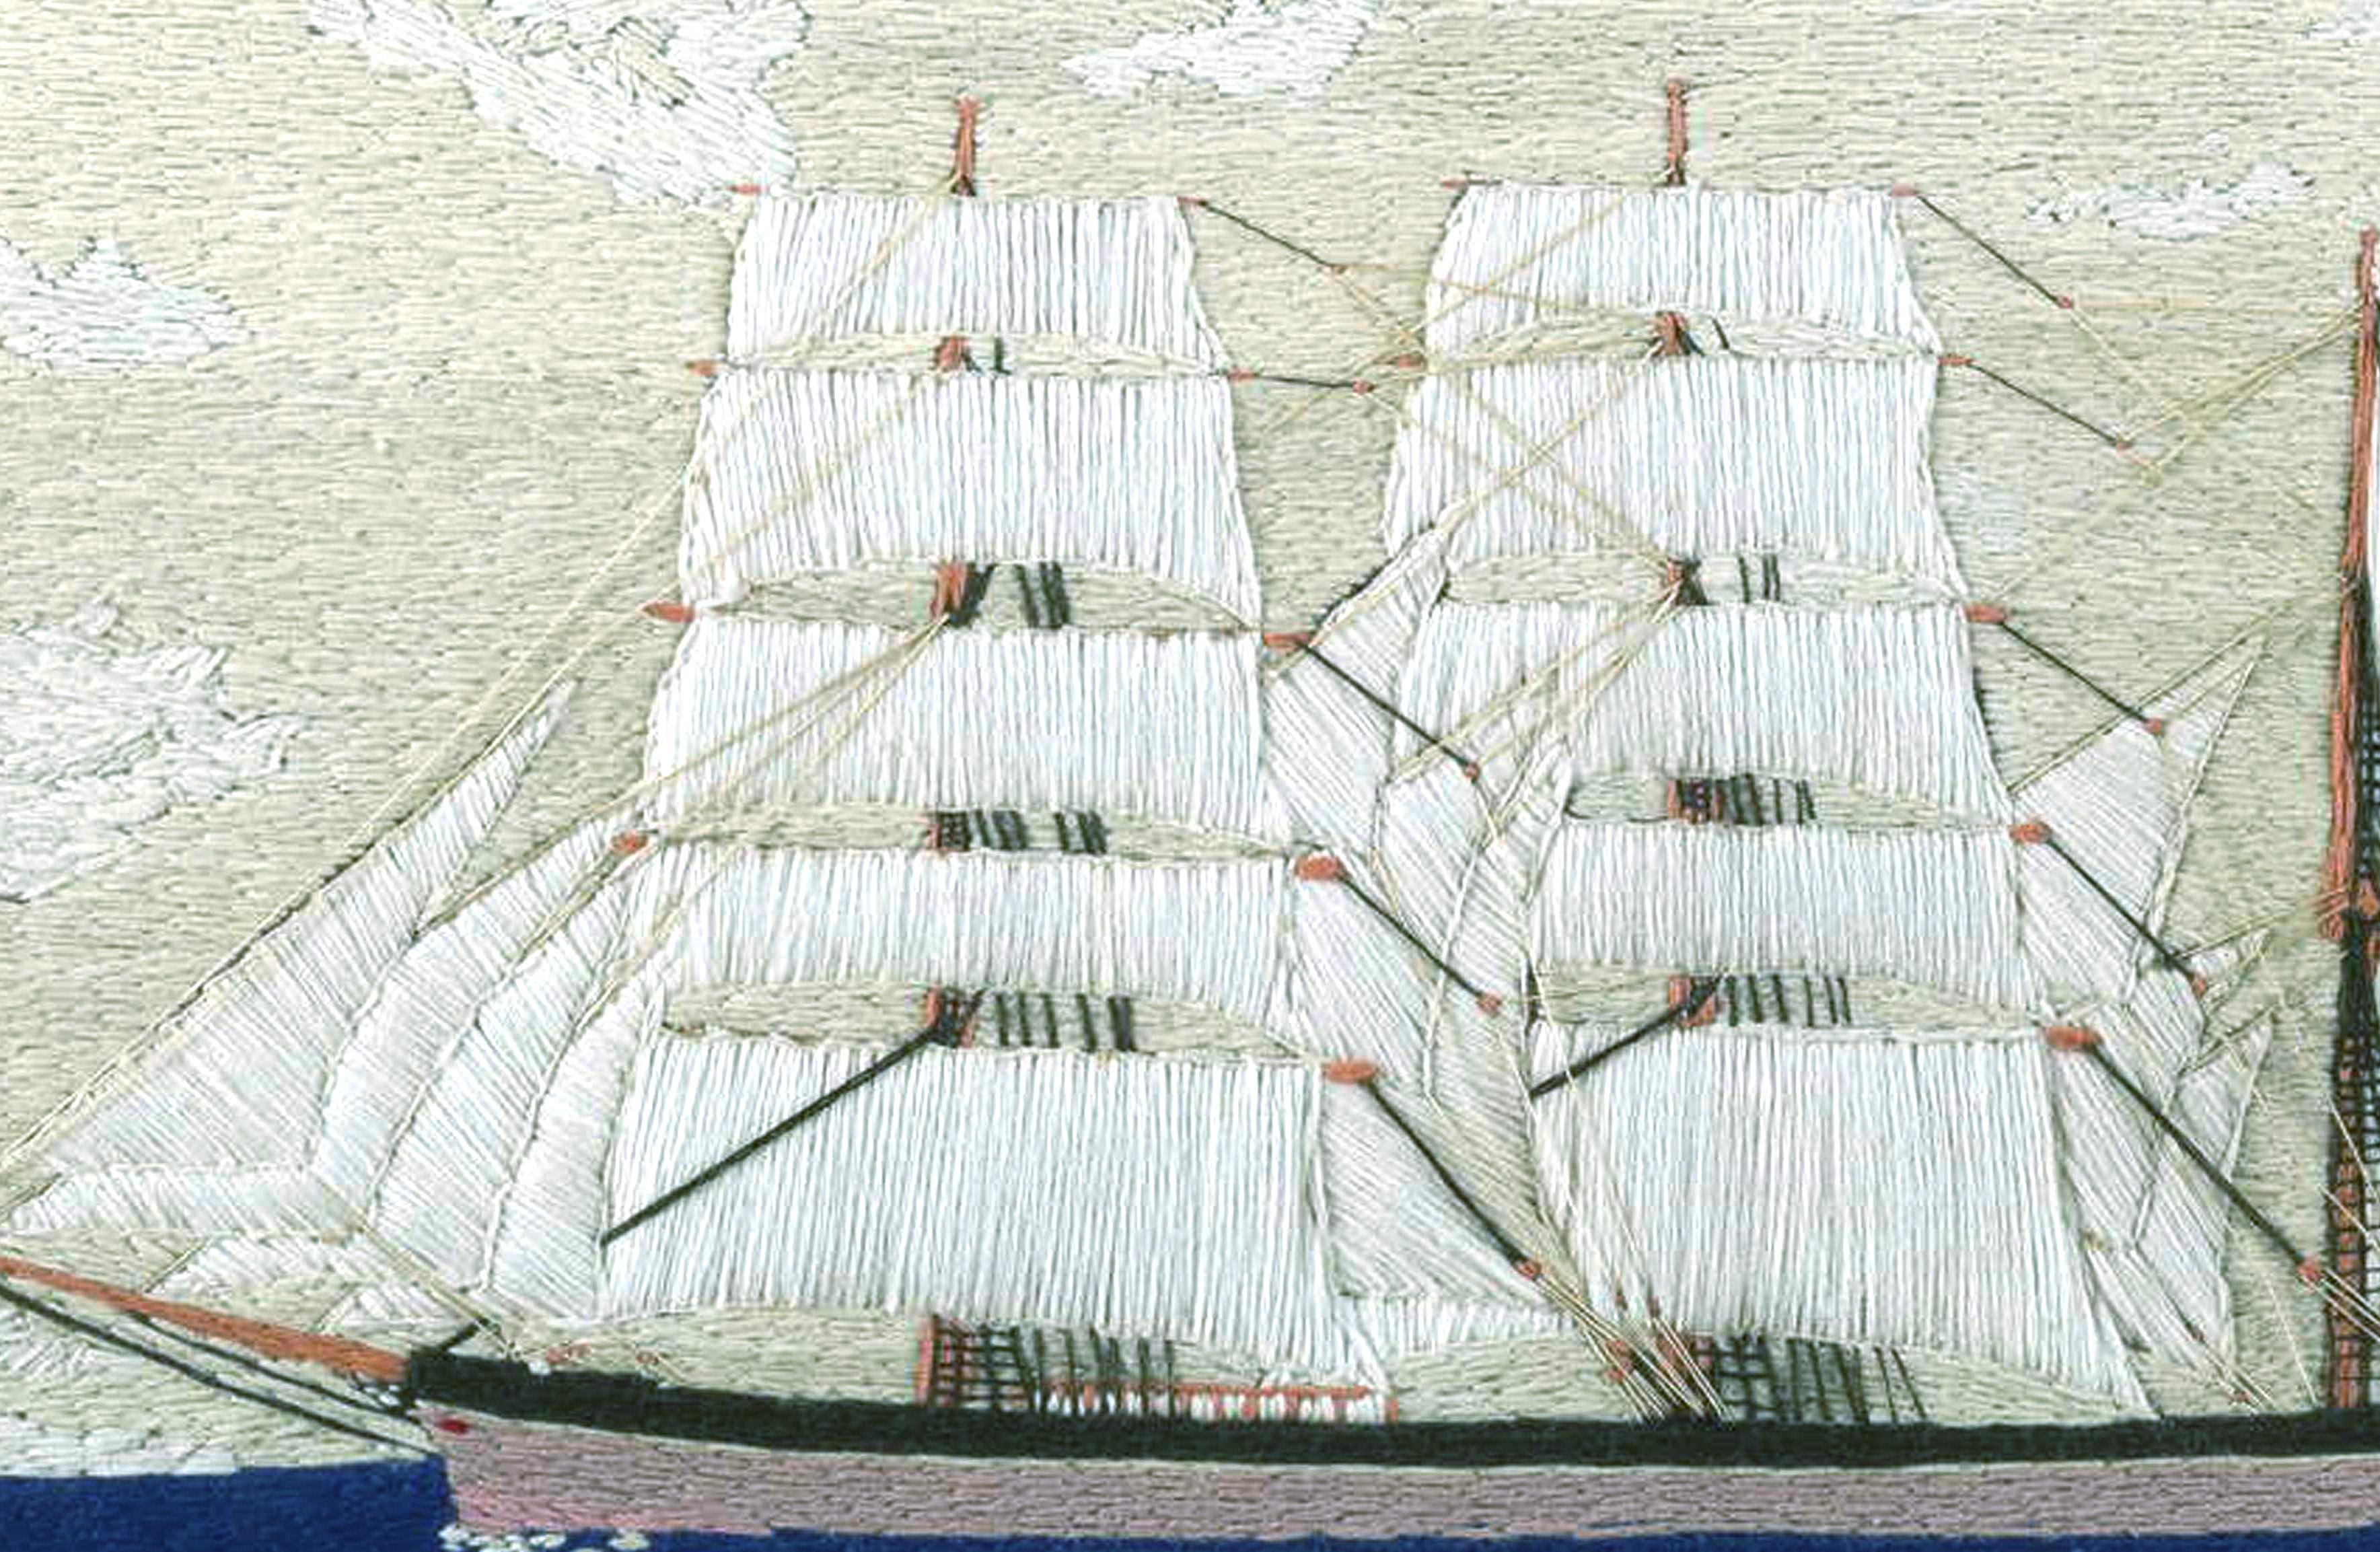 Folk Art British Sailor's Woolwork or Woolie of a Royal Navy Ship, circa 1870